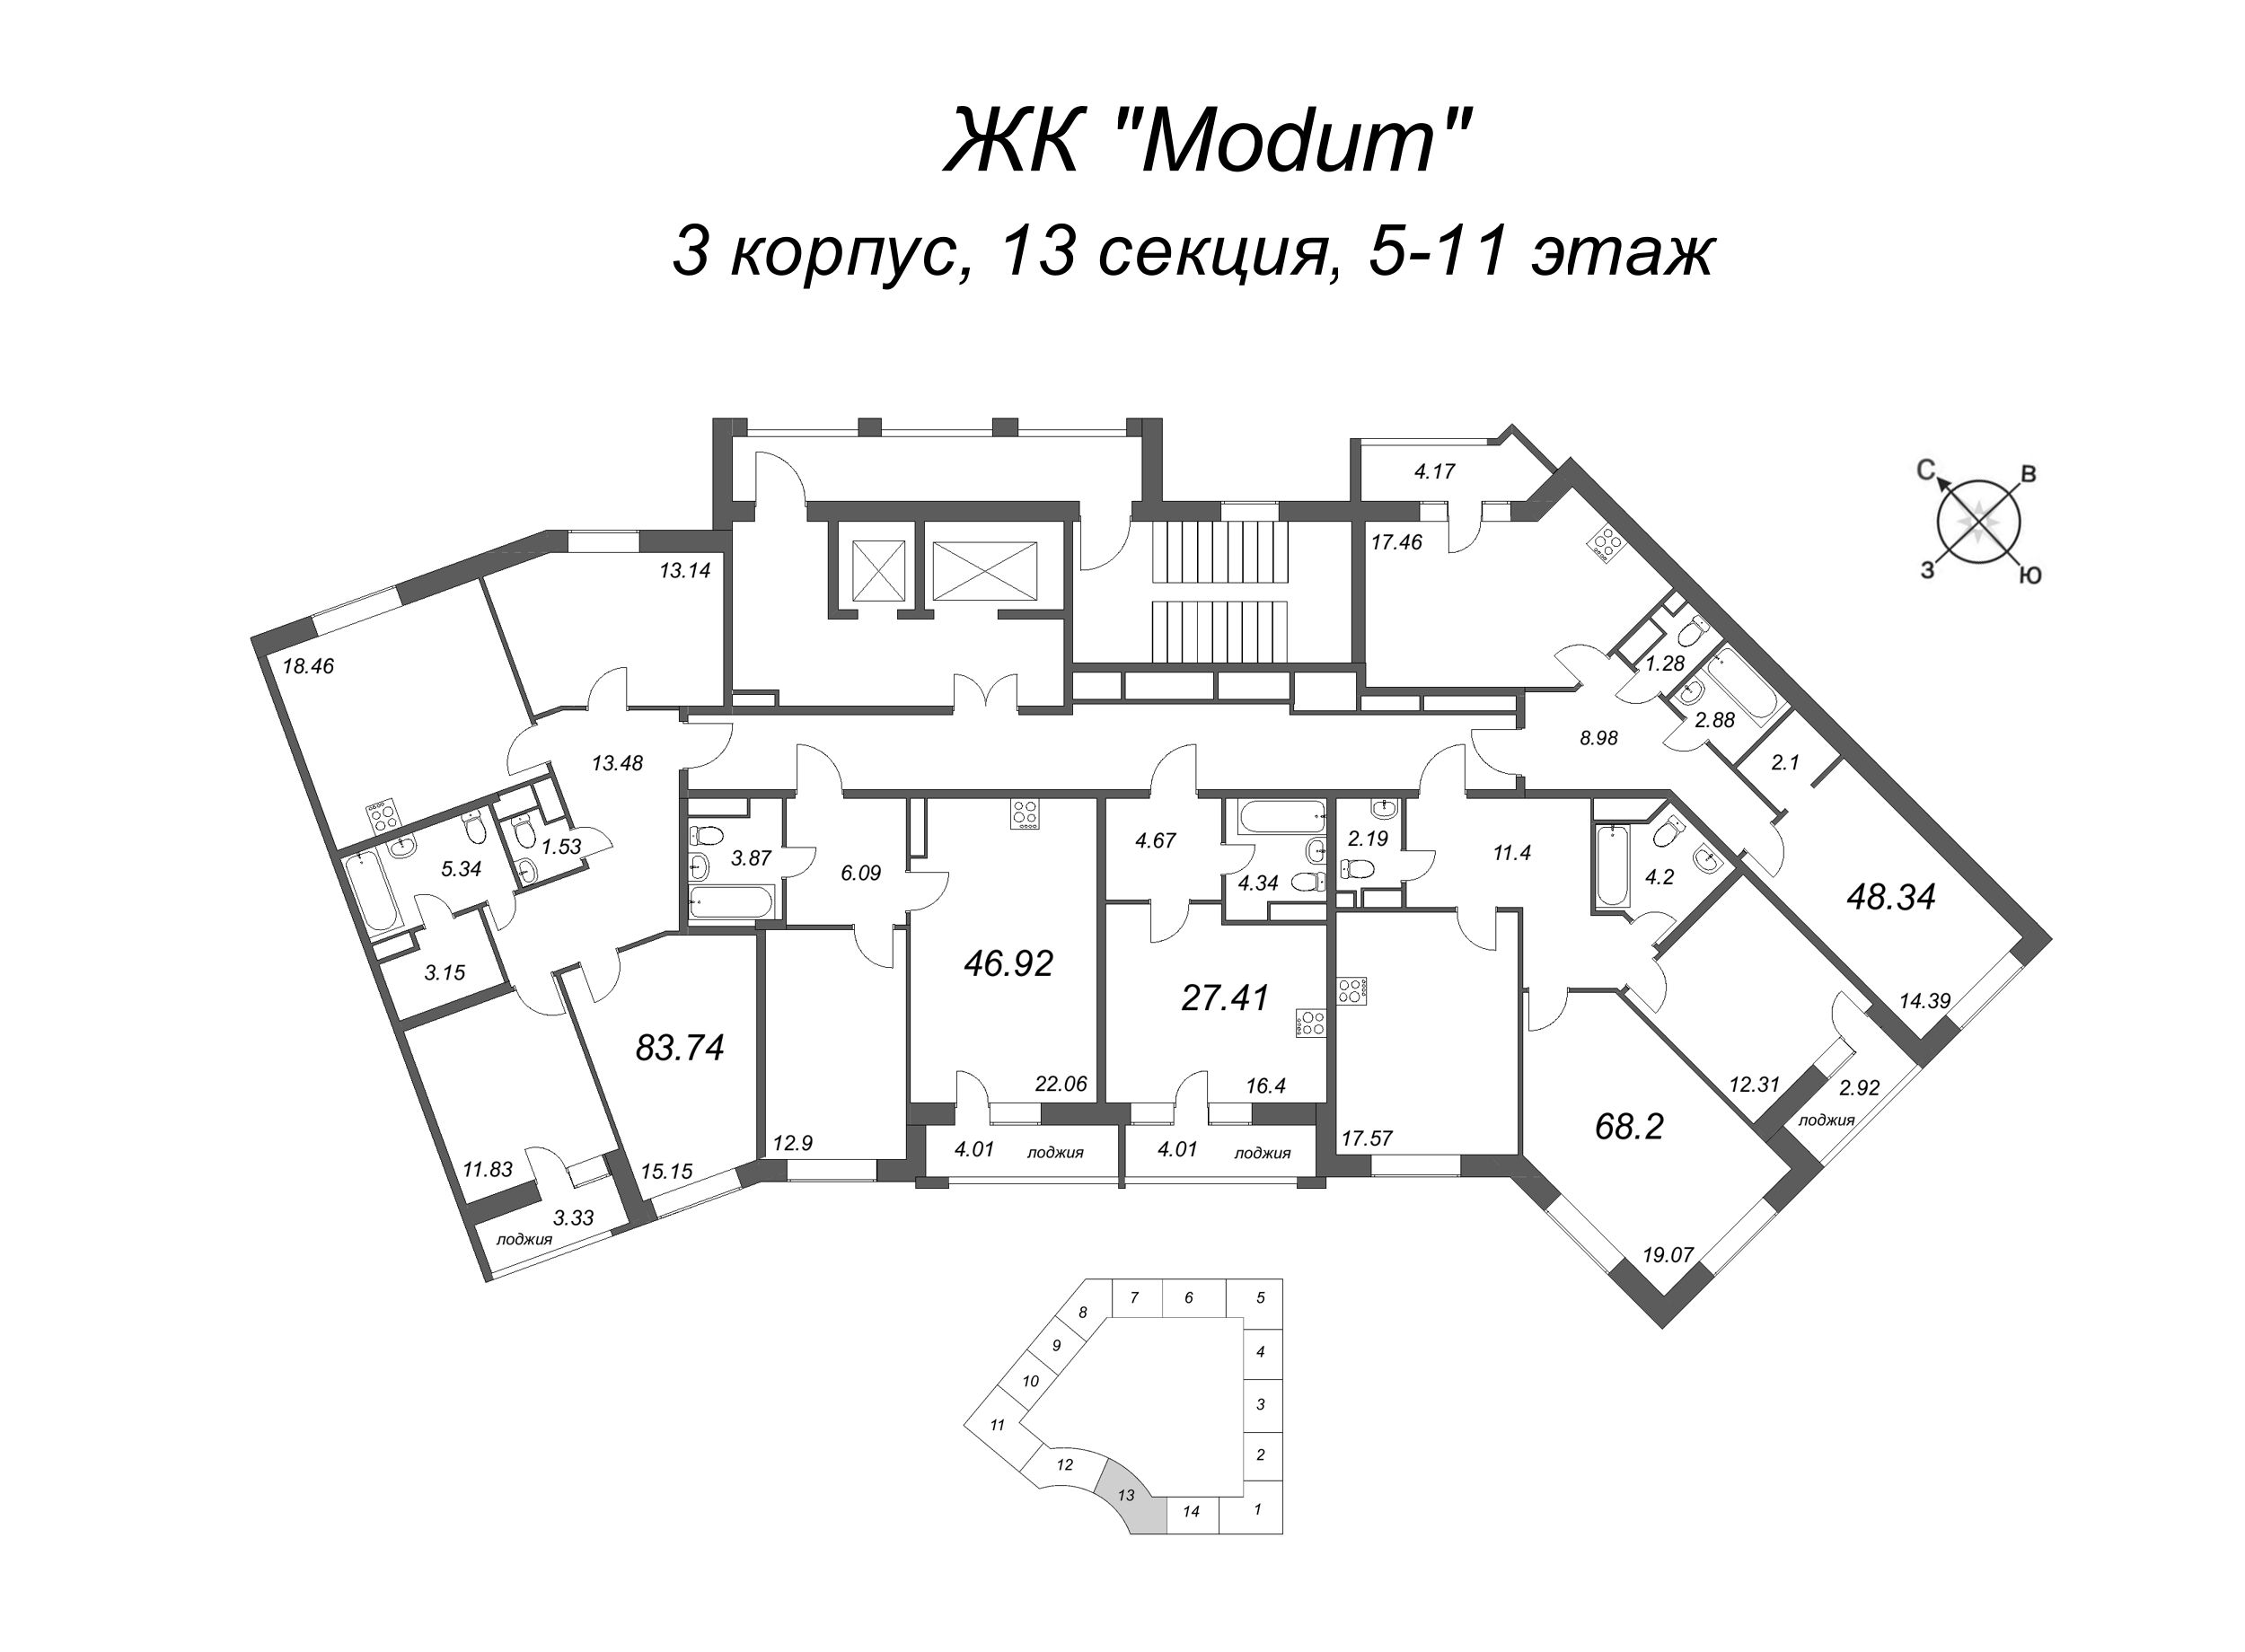 2-комнатная (Евро) квартира, 46.92 м² - планировка этажа